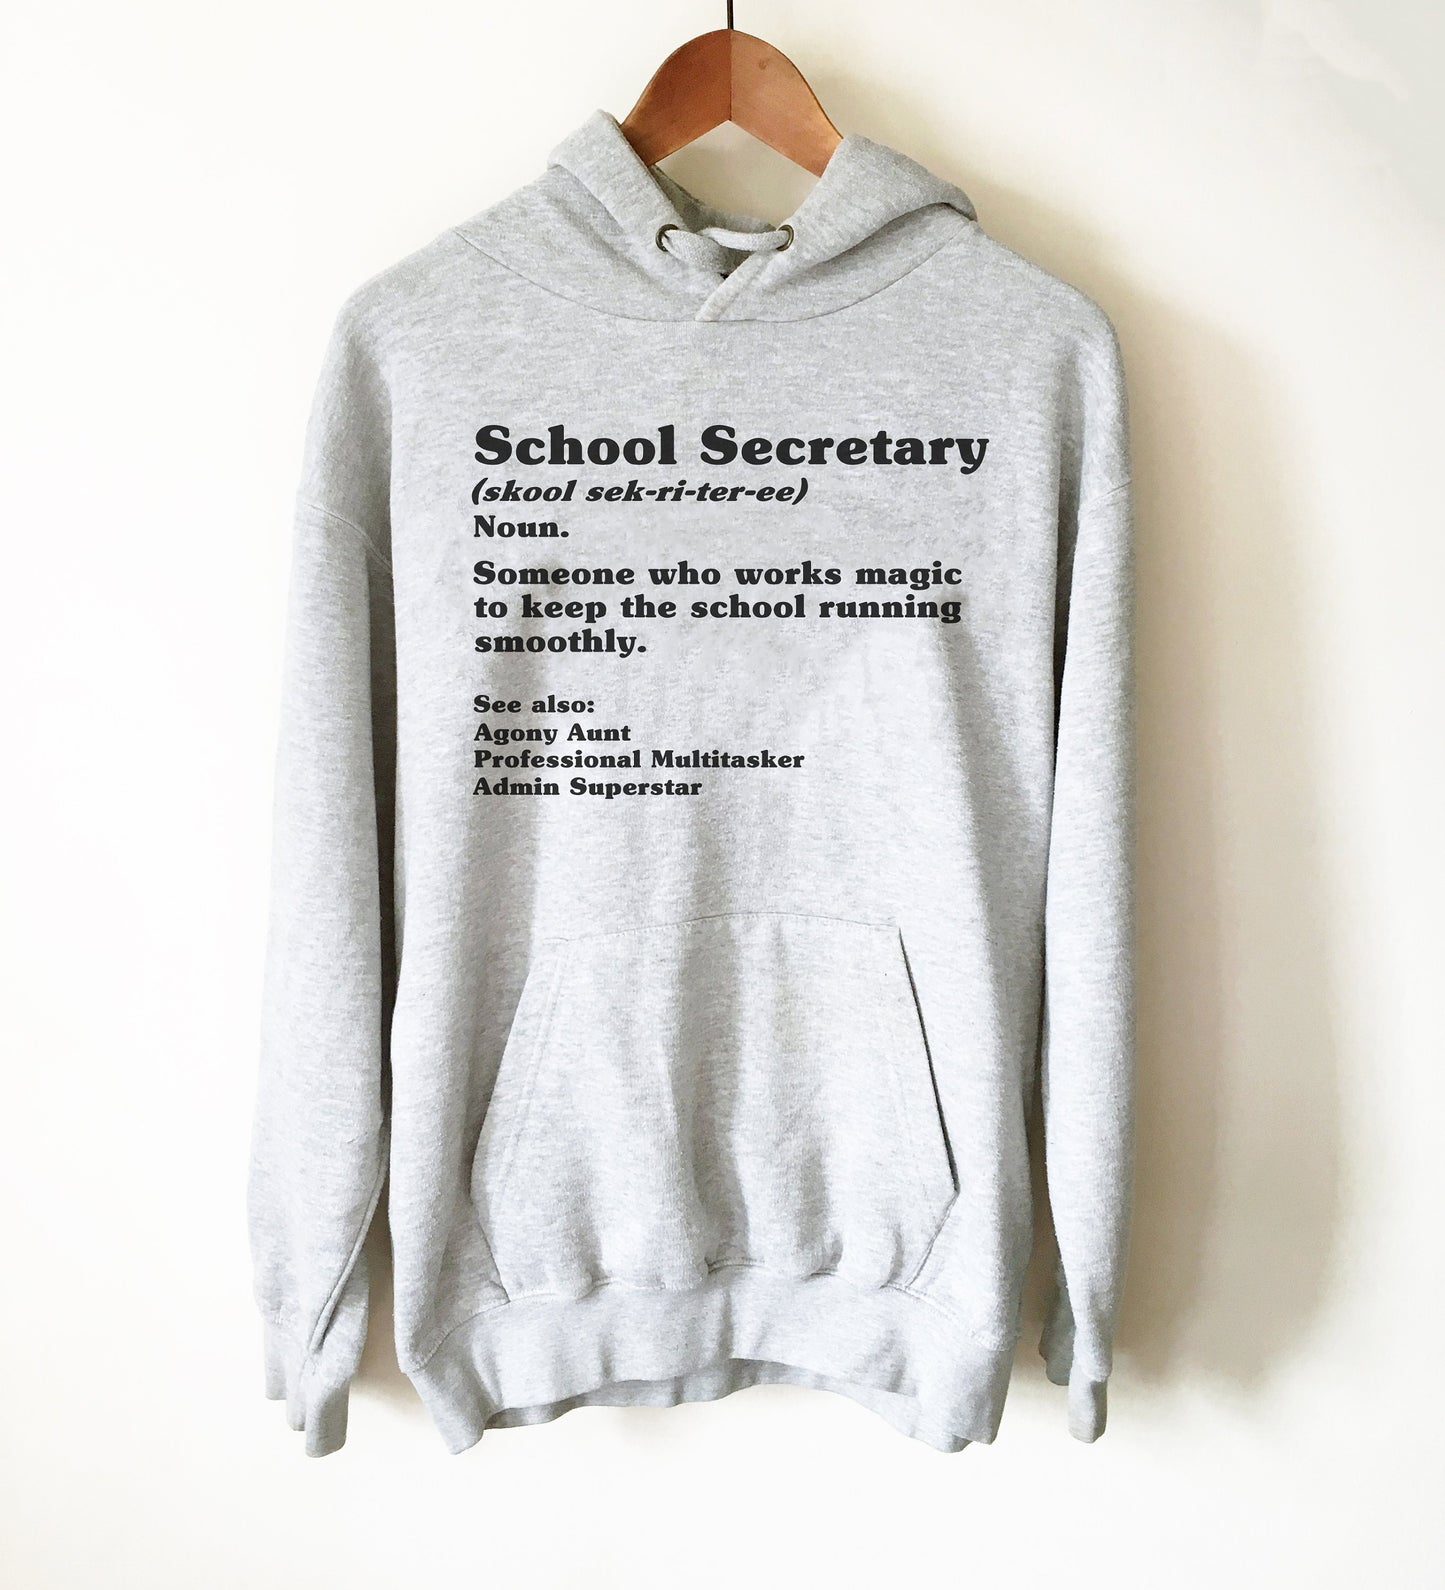 School Secretary Dictionary Definition Hoodie - School Secretary Shirt, School Secretary Gift, Secretary Shirt, End Of School Gift